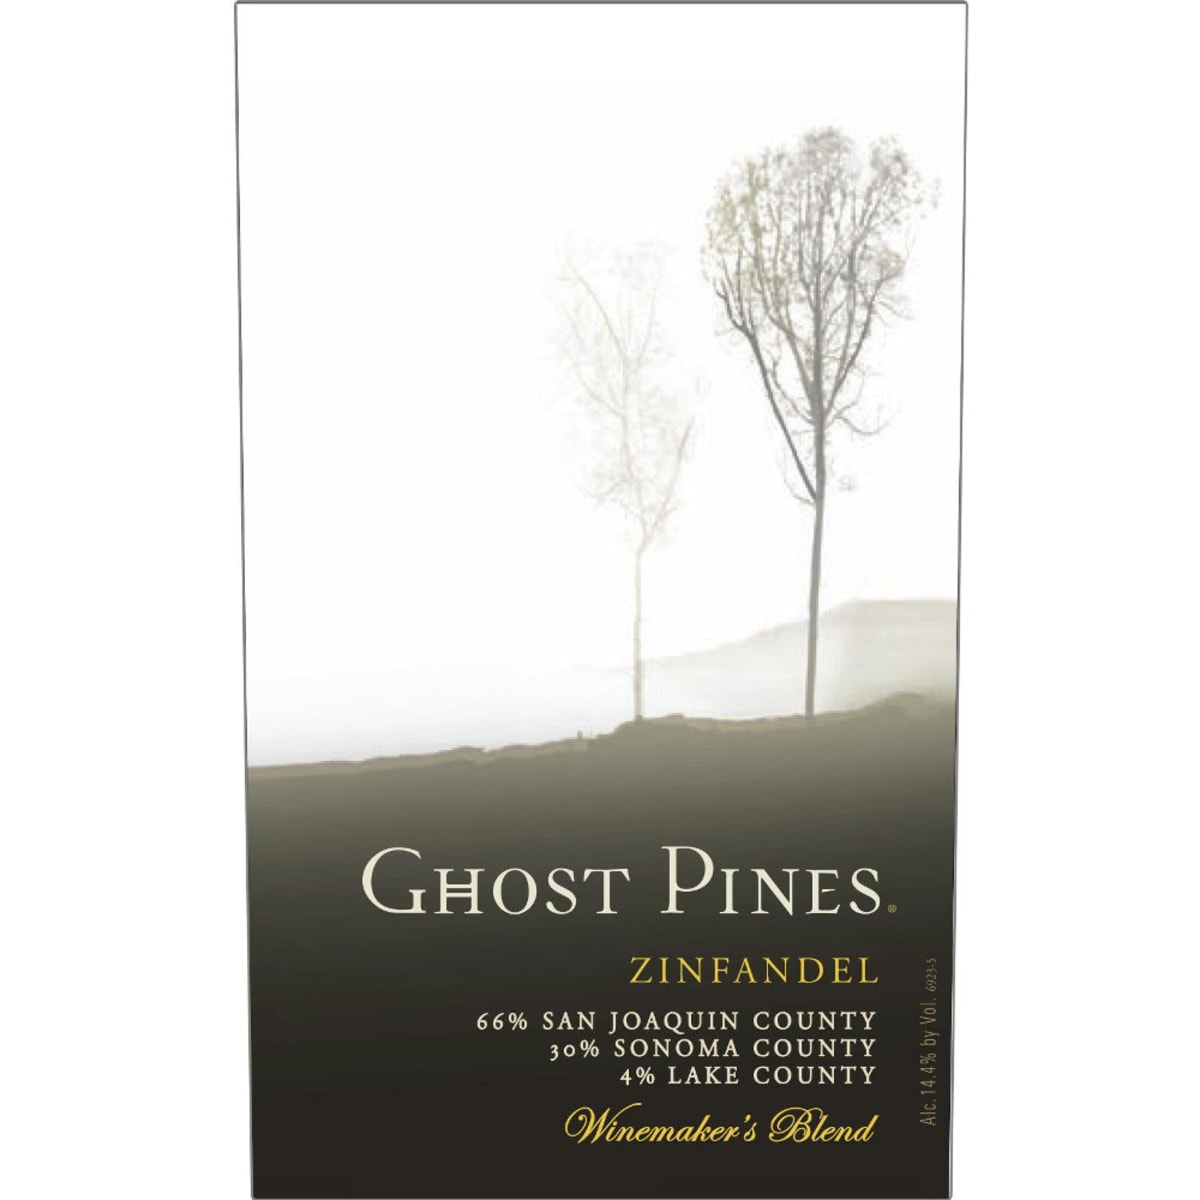 2014 Ghost Pines Zinfandel Joaquin Sonoma Lake image